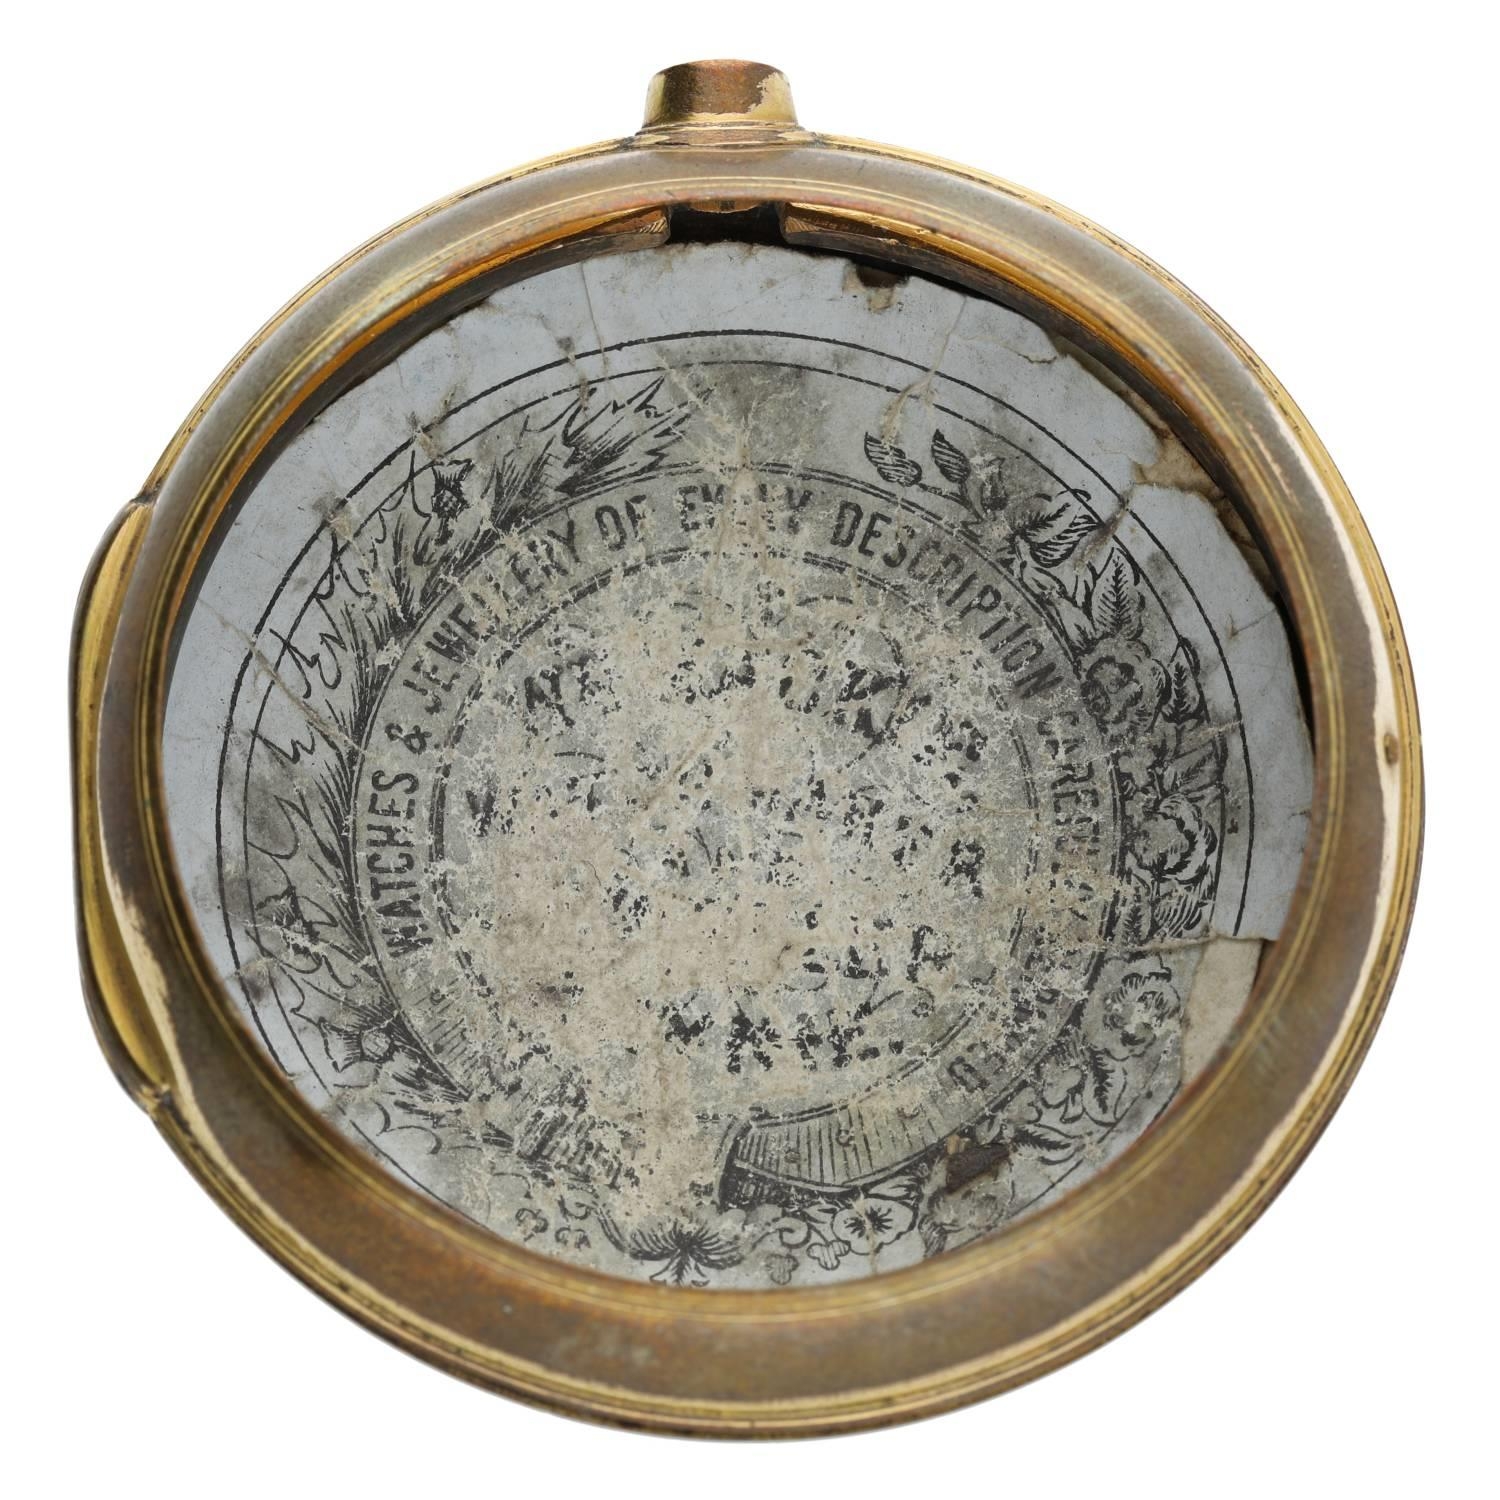 Pistor, Leadenhall Street - late 18th century English 'Doctors' gilt metal verge pocket watch, - Image 7 of 7